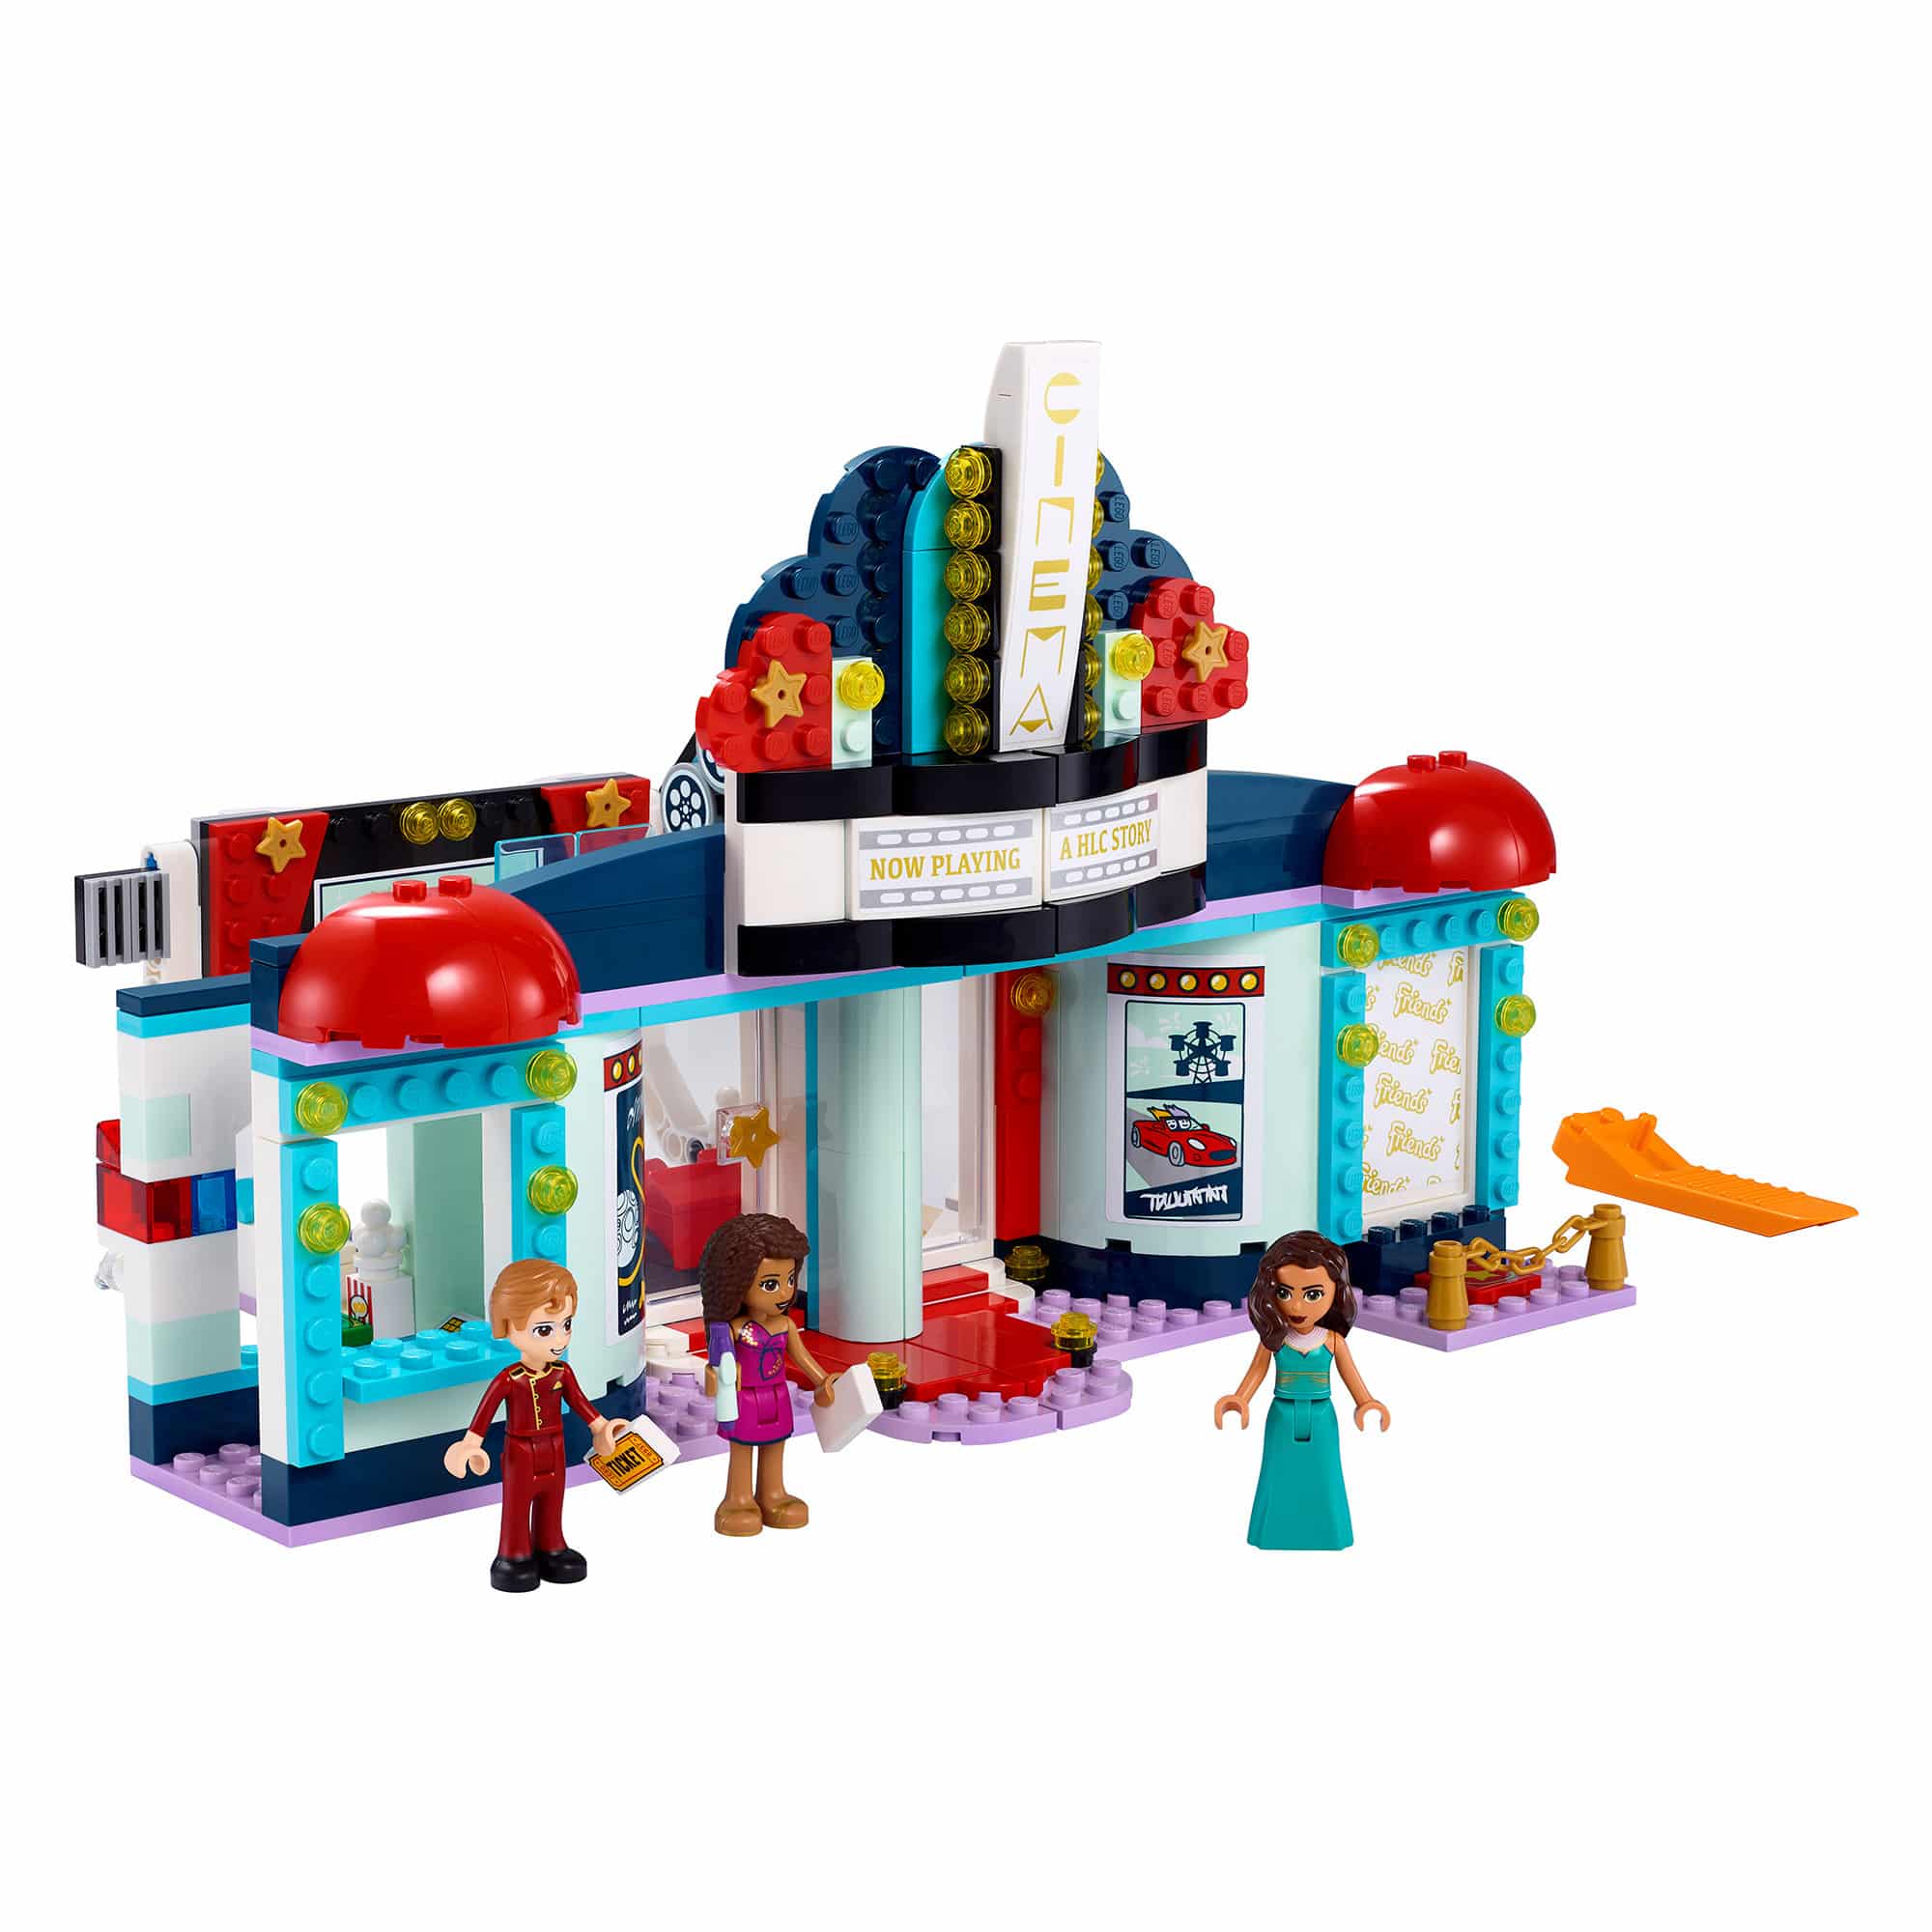 LEGO Friends 41448 - Heartlake City Cinema